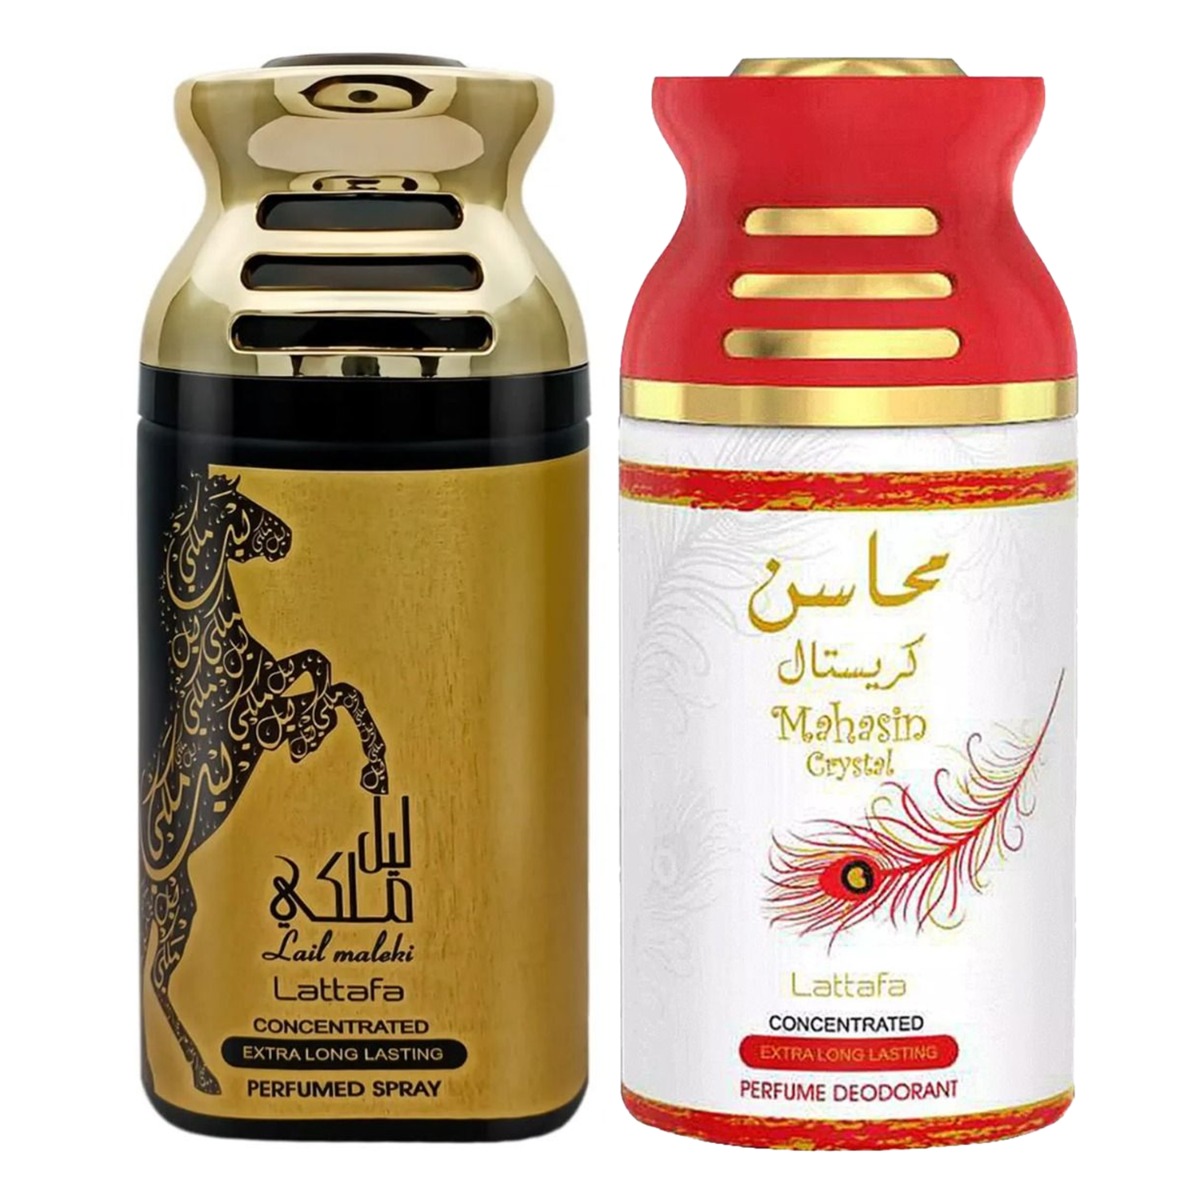 Lattafa Mahasin Crystal & Lail Maleki Concentrated Extra Long Lasting Perfumed Deodorant, 250ml Each